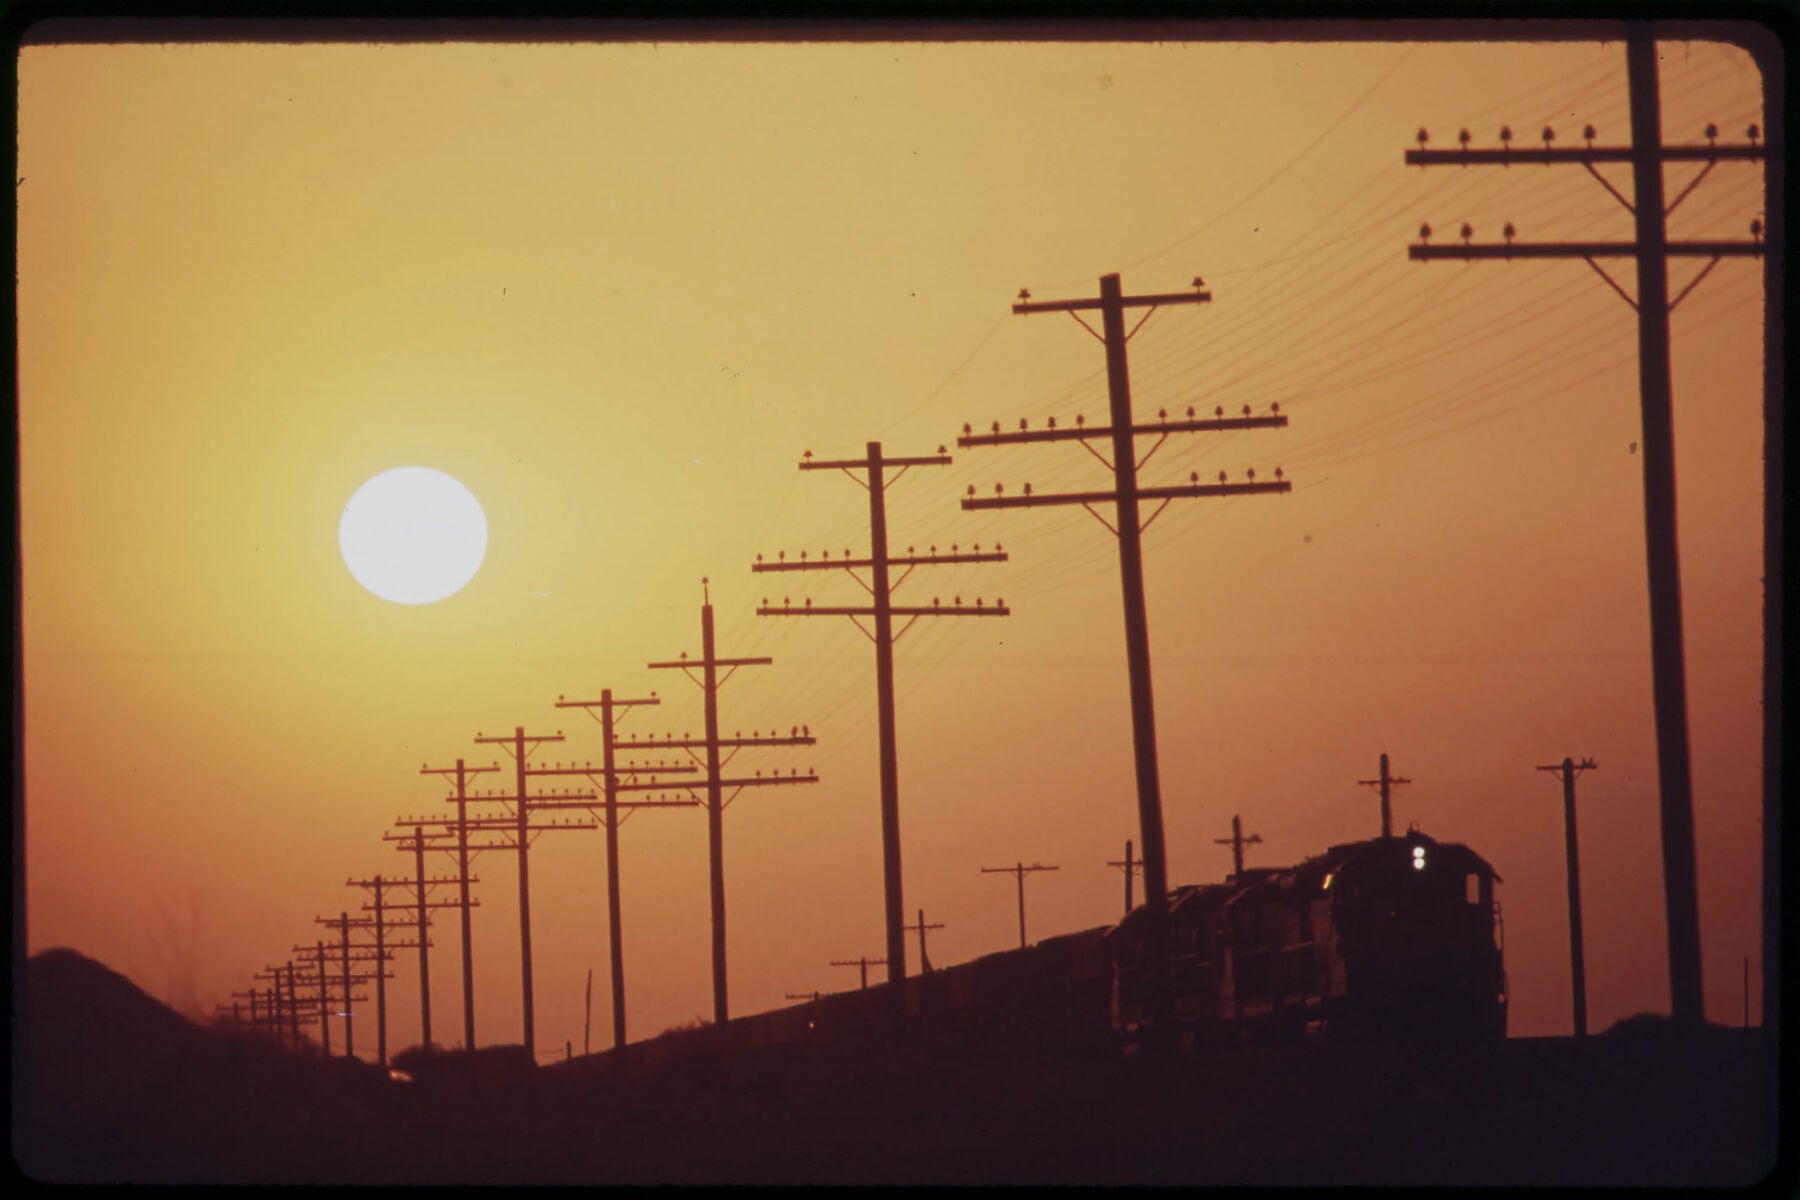 Transmission lines and railroad near Salton Sea - May 1972